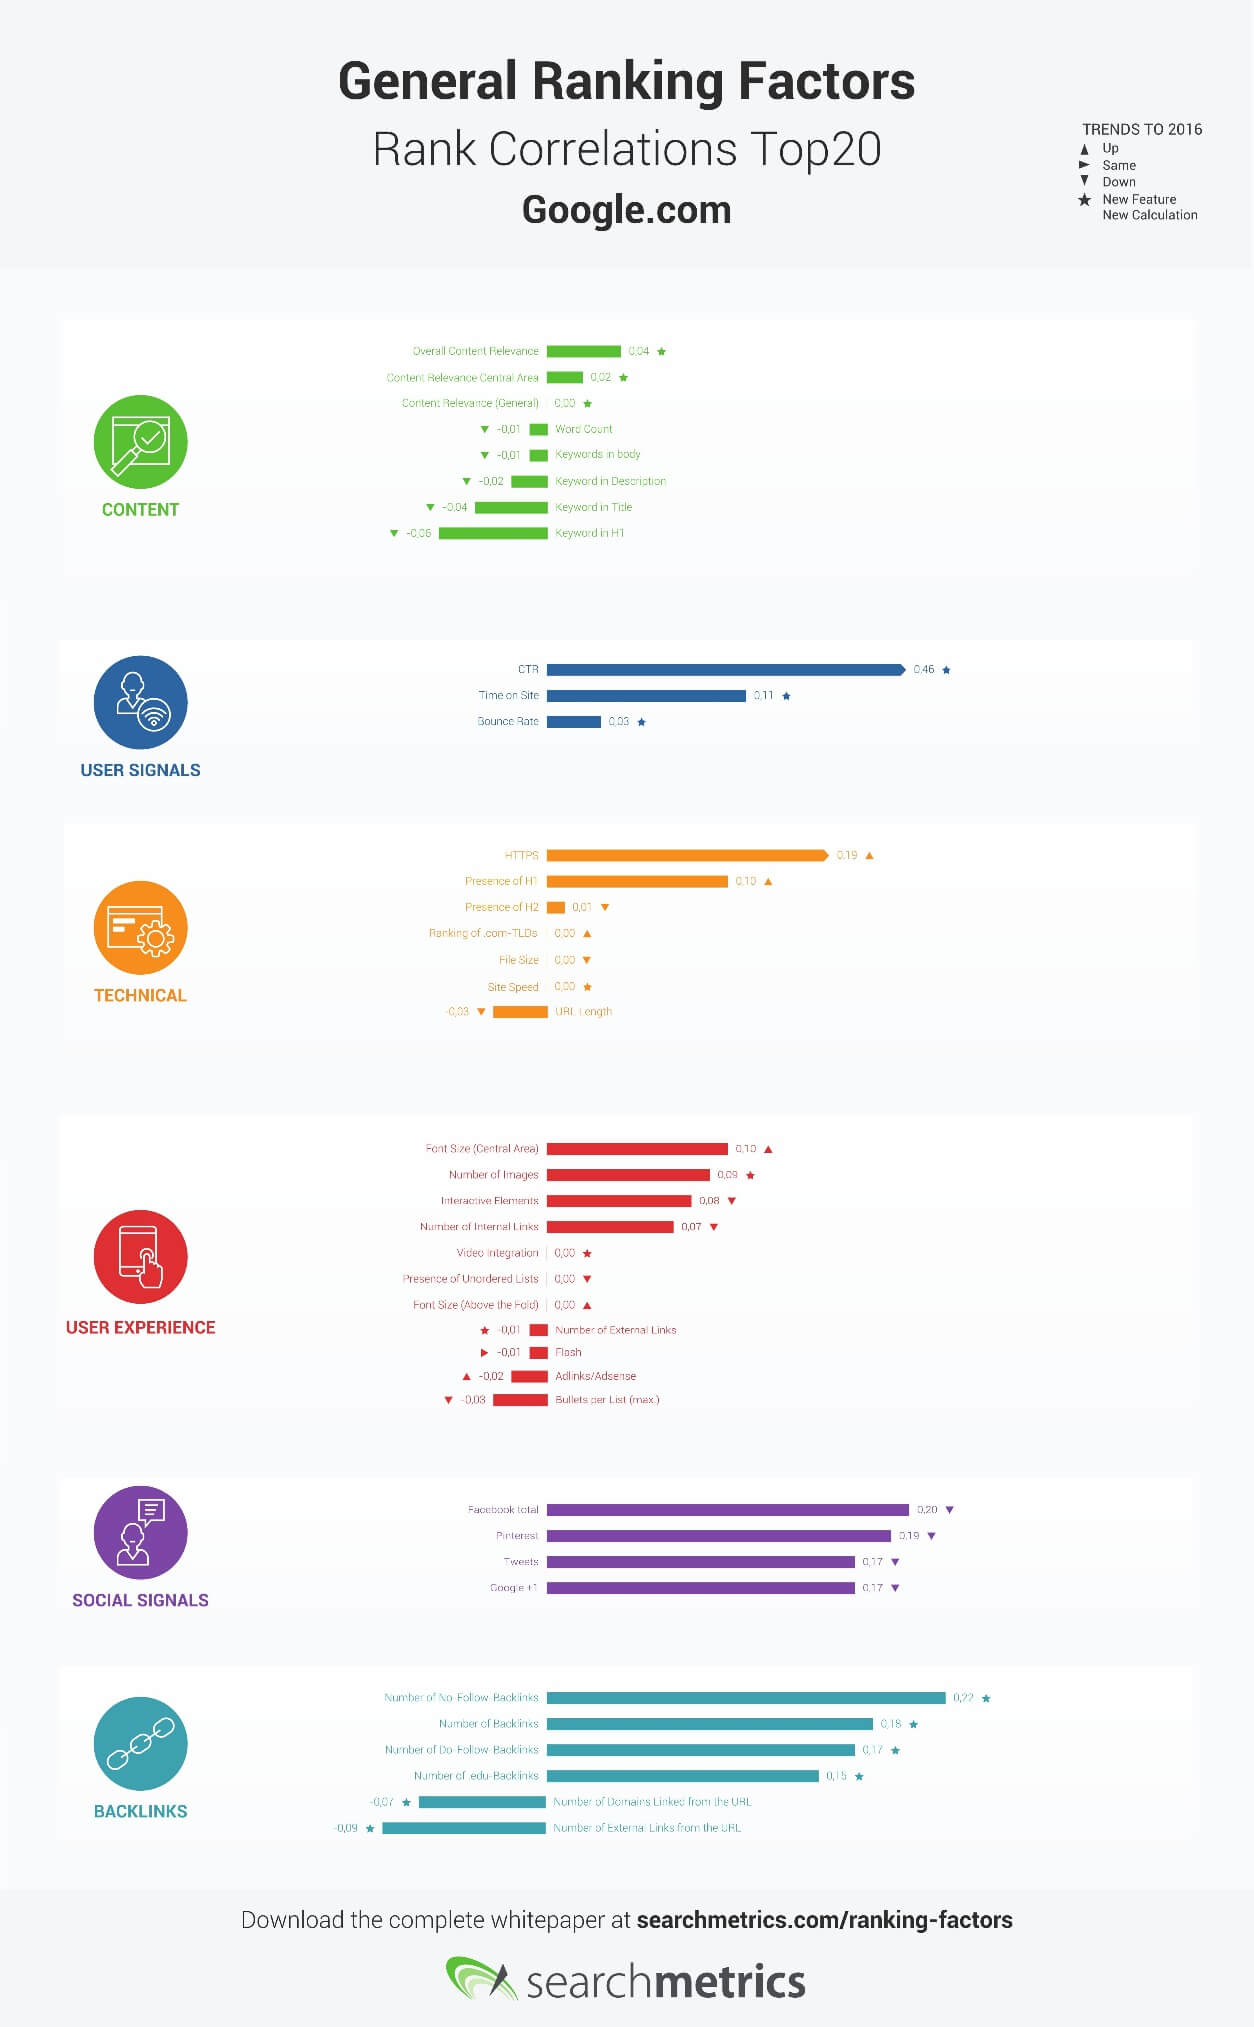 Graphic: General Ranking Factors – Rank Correlations Top 20 from Google.com